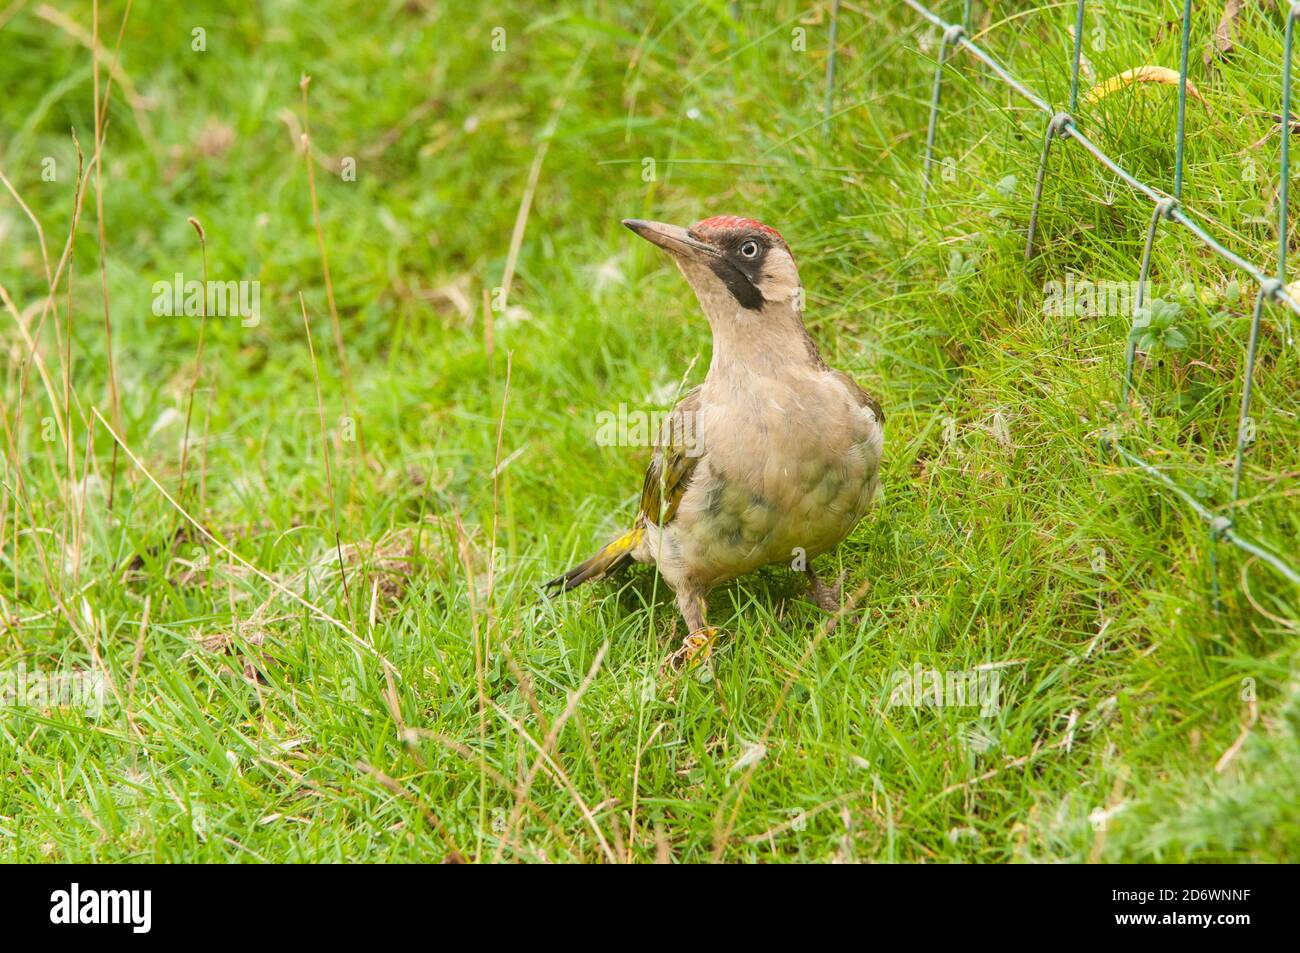 Green woodpecker on grass, UK. Stock Photo